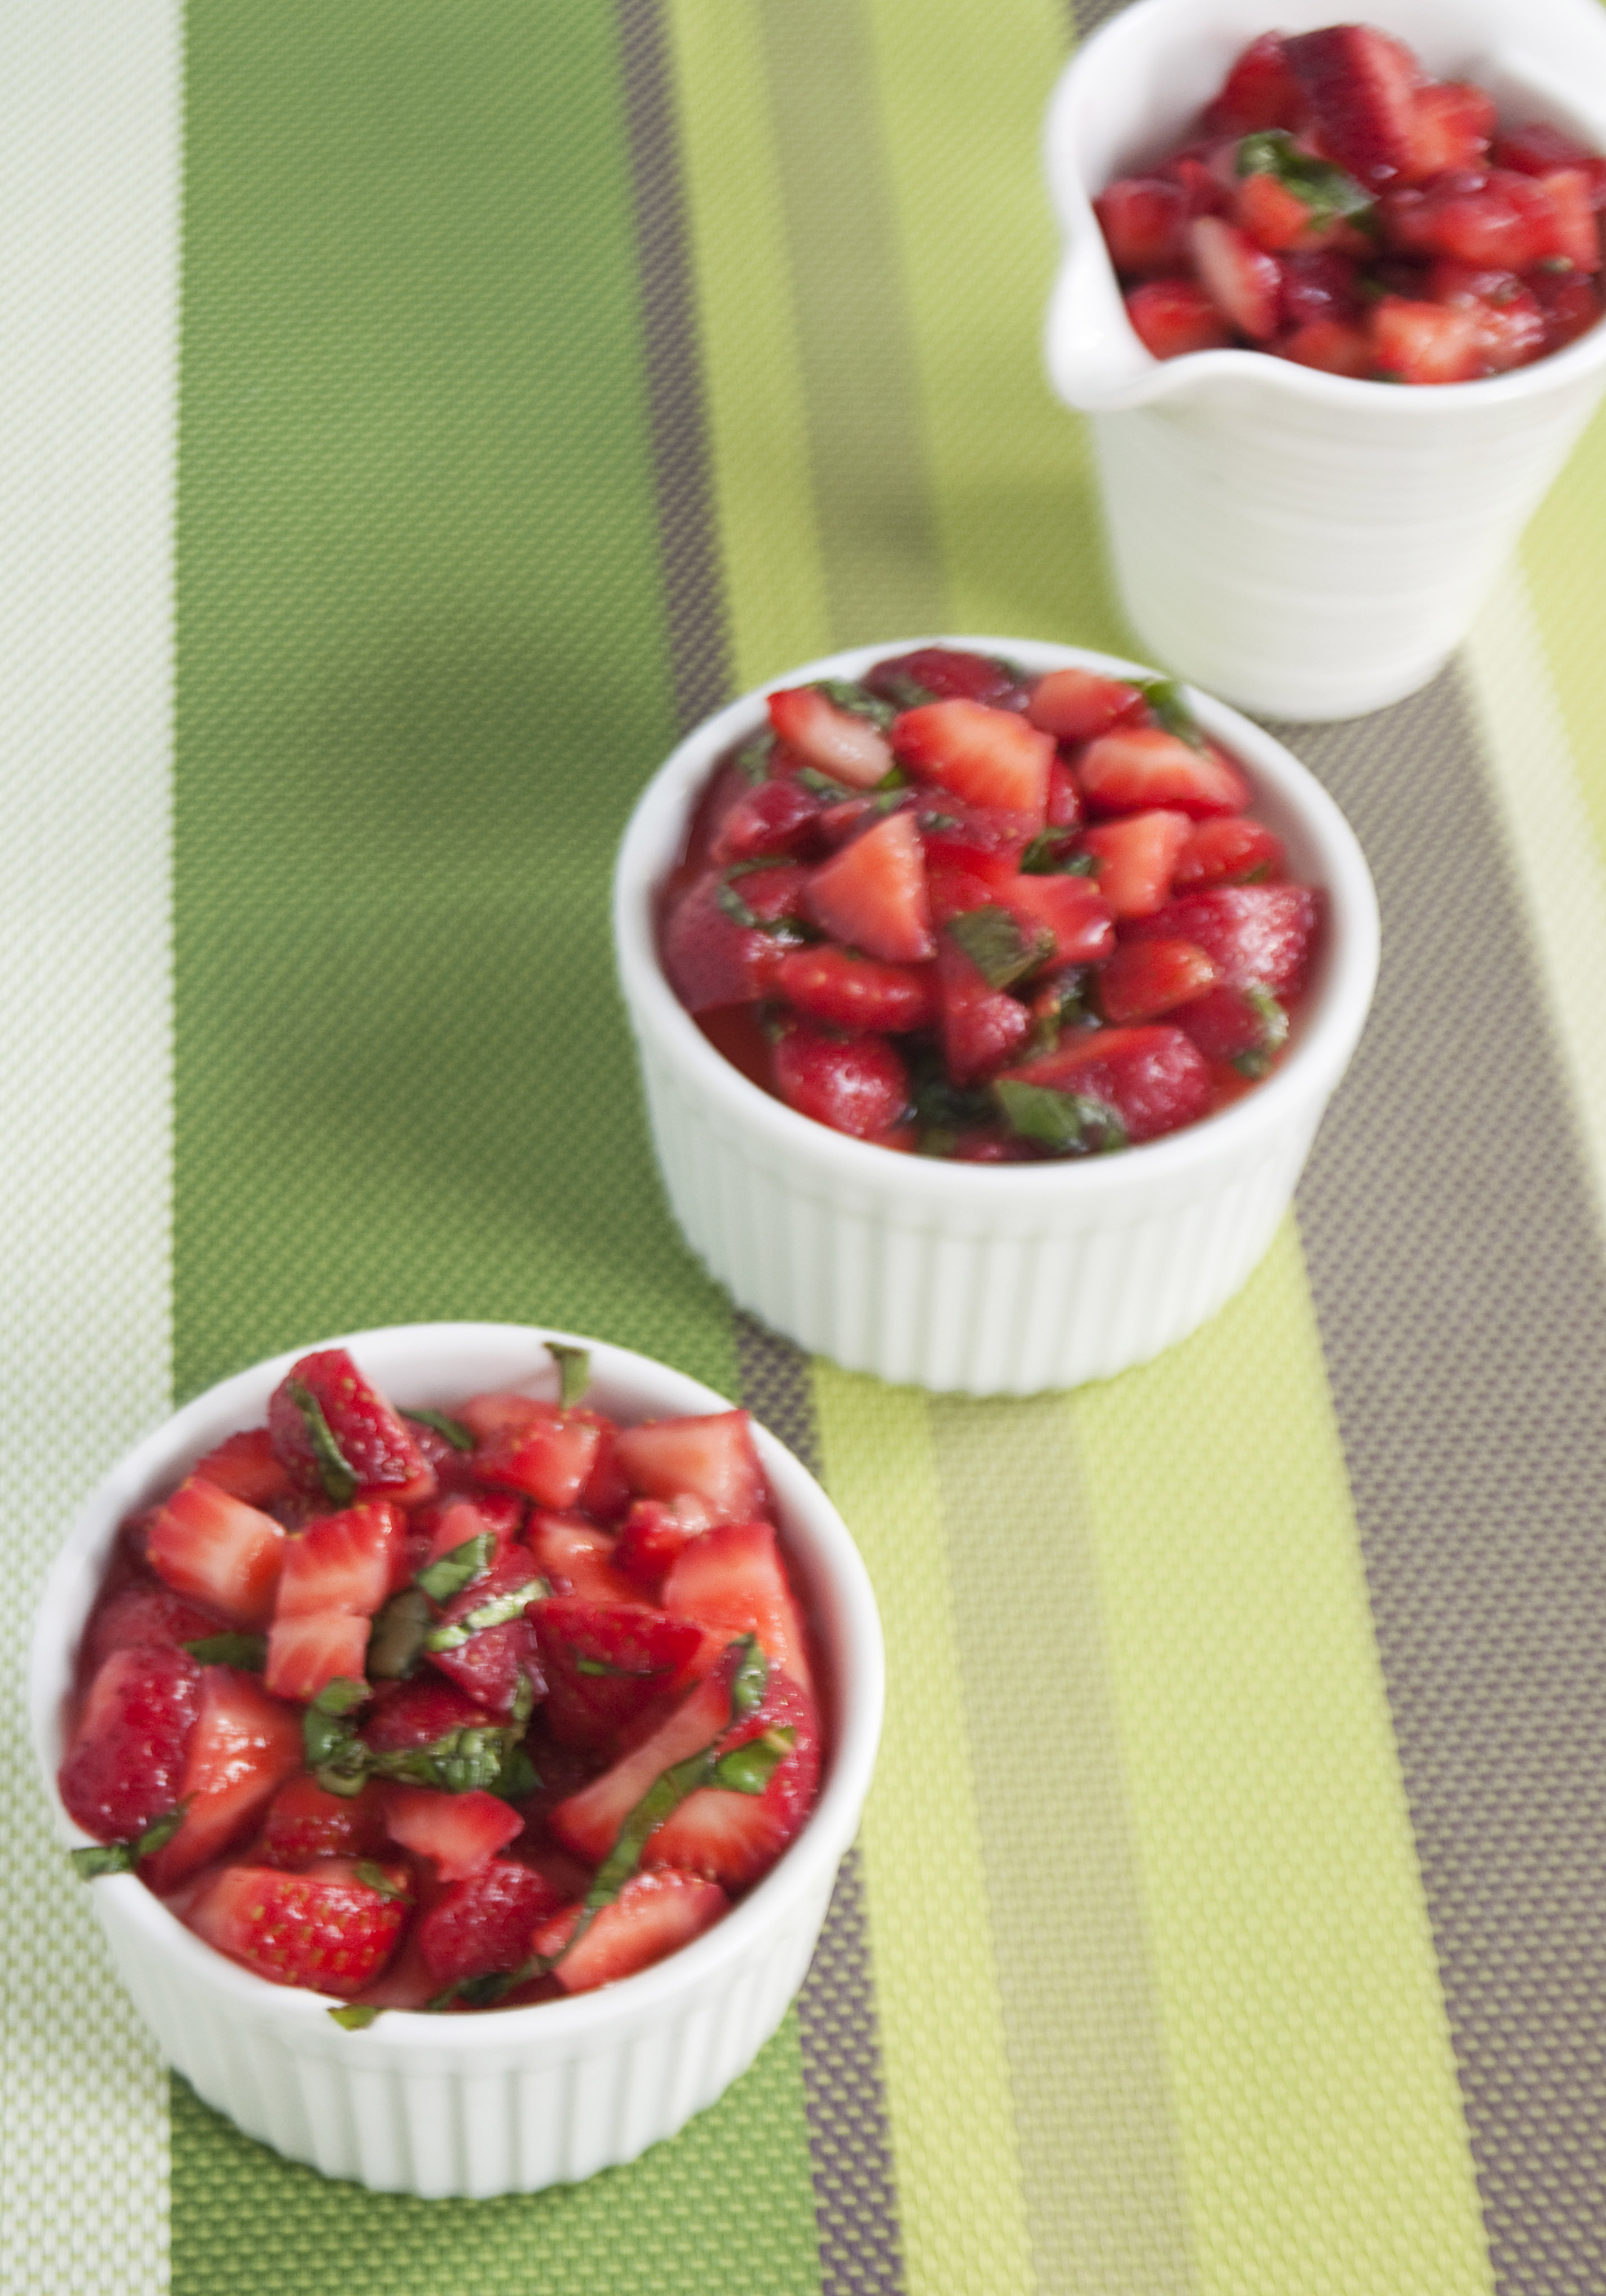 Lemon Basil Panna Cotta with Strawberries Recipe on Food52